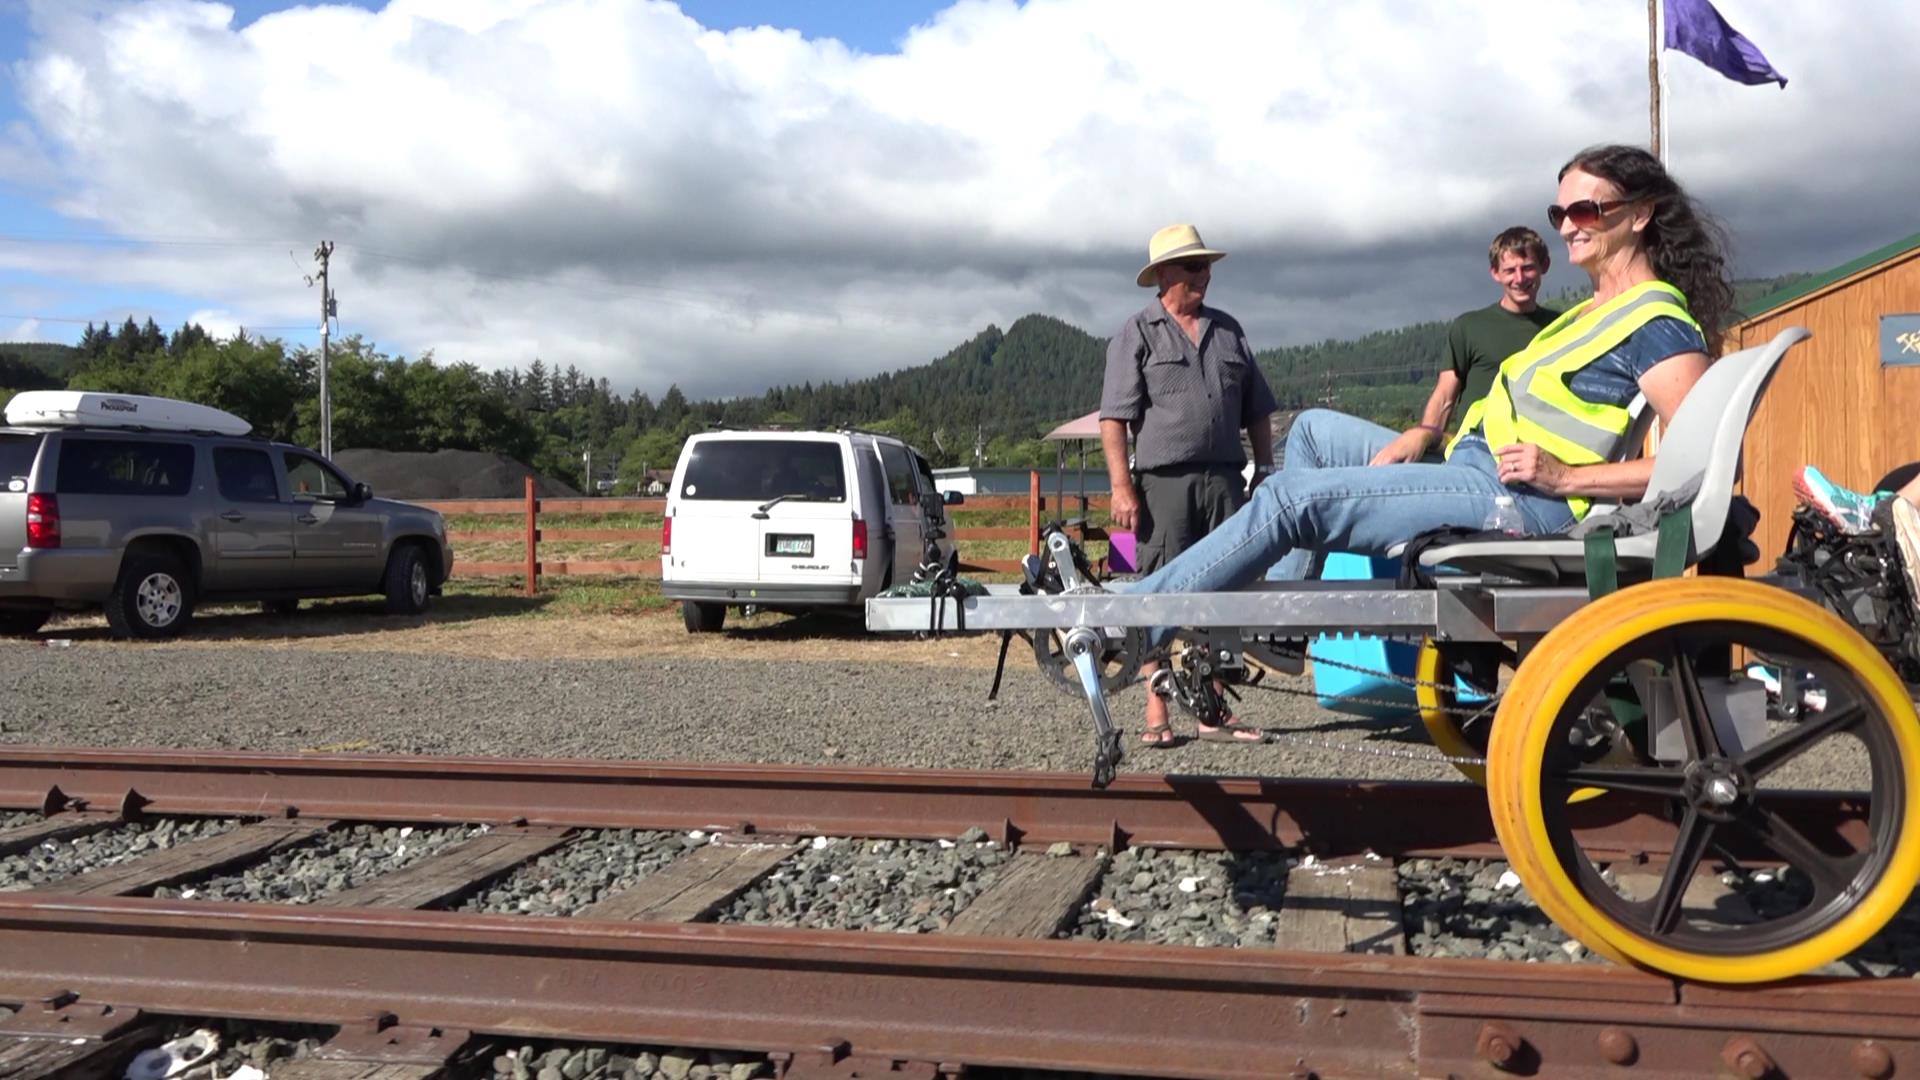 Oregon Coast Railriders